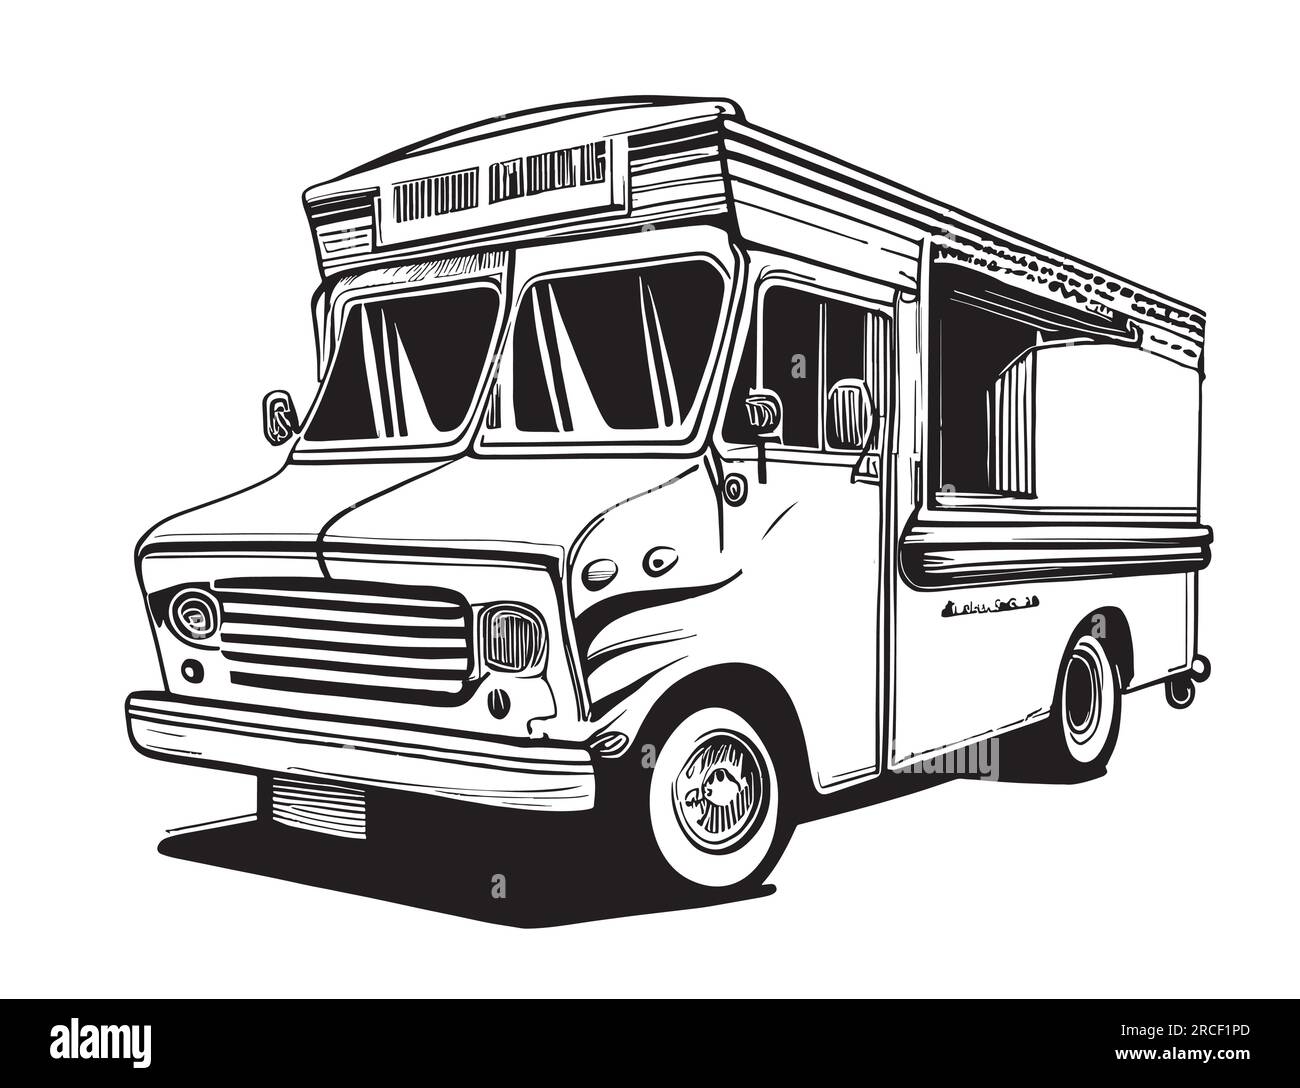 Food truck fast food sketch hand drawn sketch illustration Stock Vector